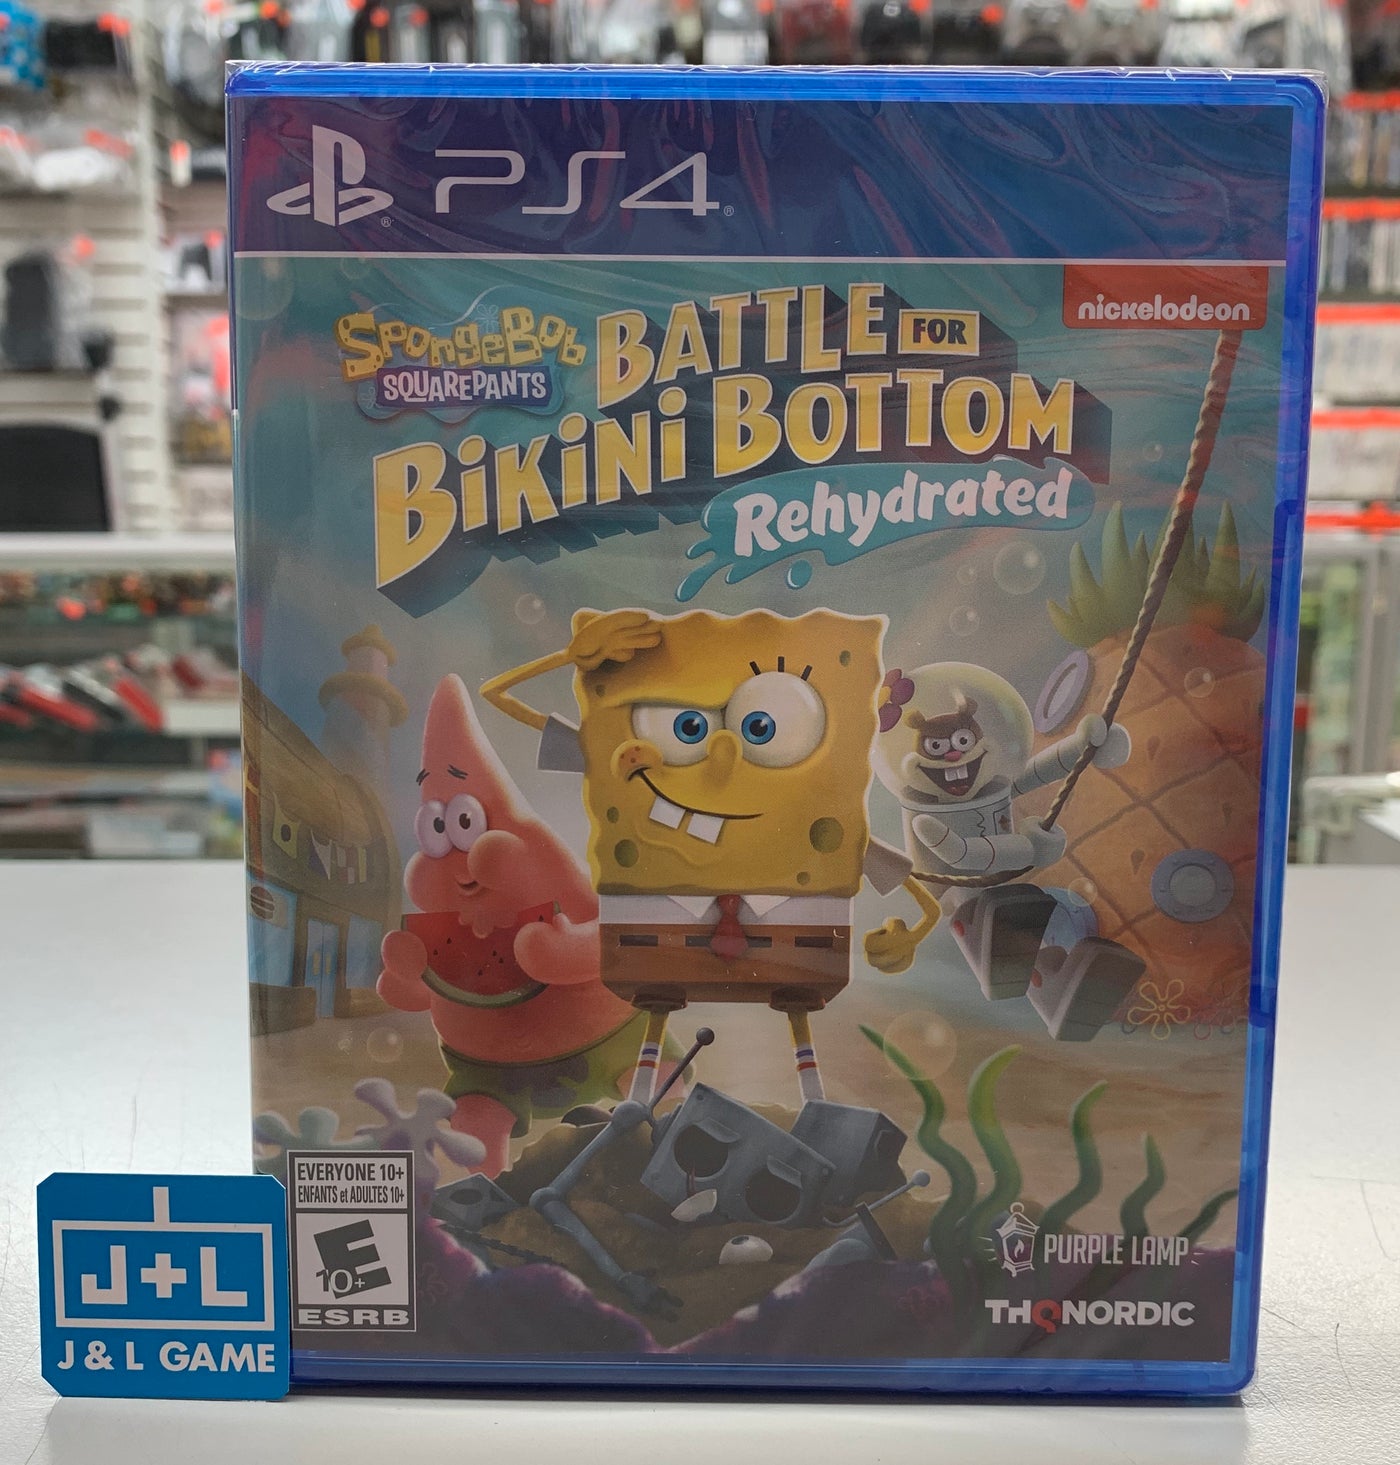 Bikini Battle - J&L PlaySta for Rehydrated - | Squarepants: Game Bottom Spongebob